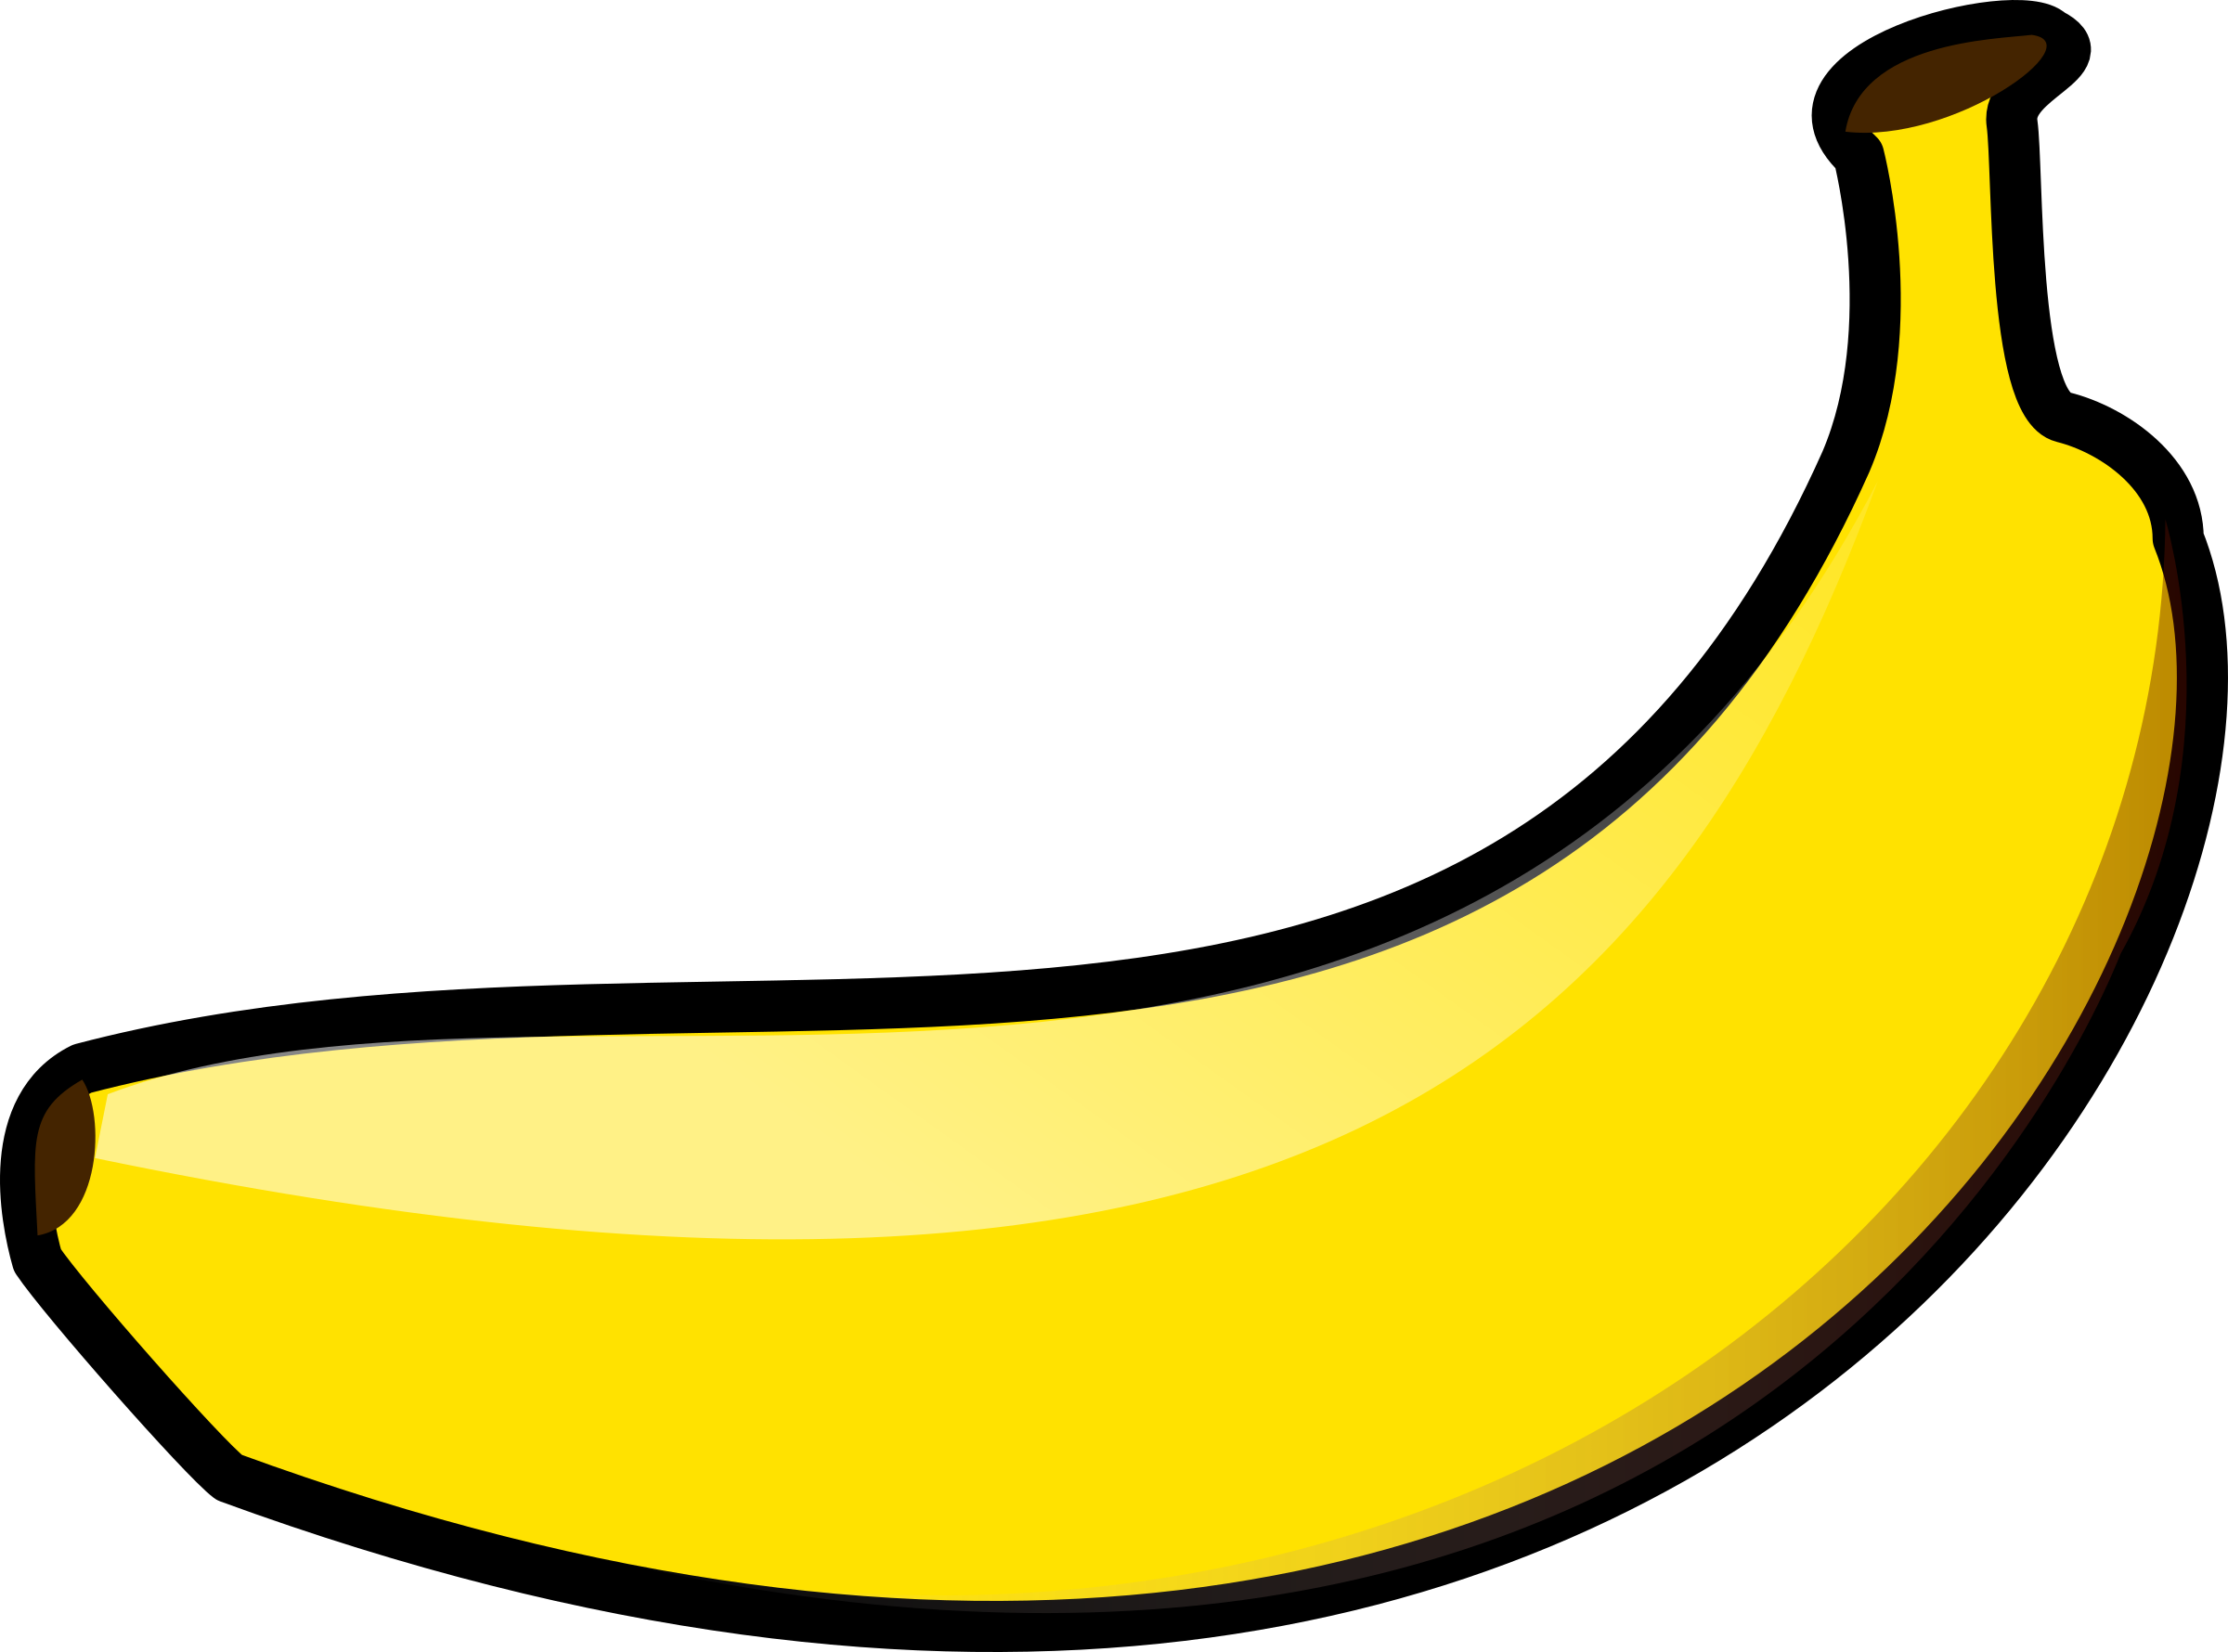 Clipart banana yellow banana, Clipart banana yellow banana